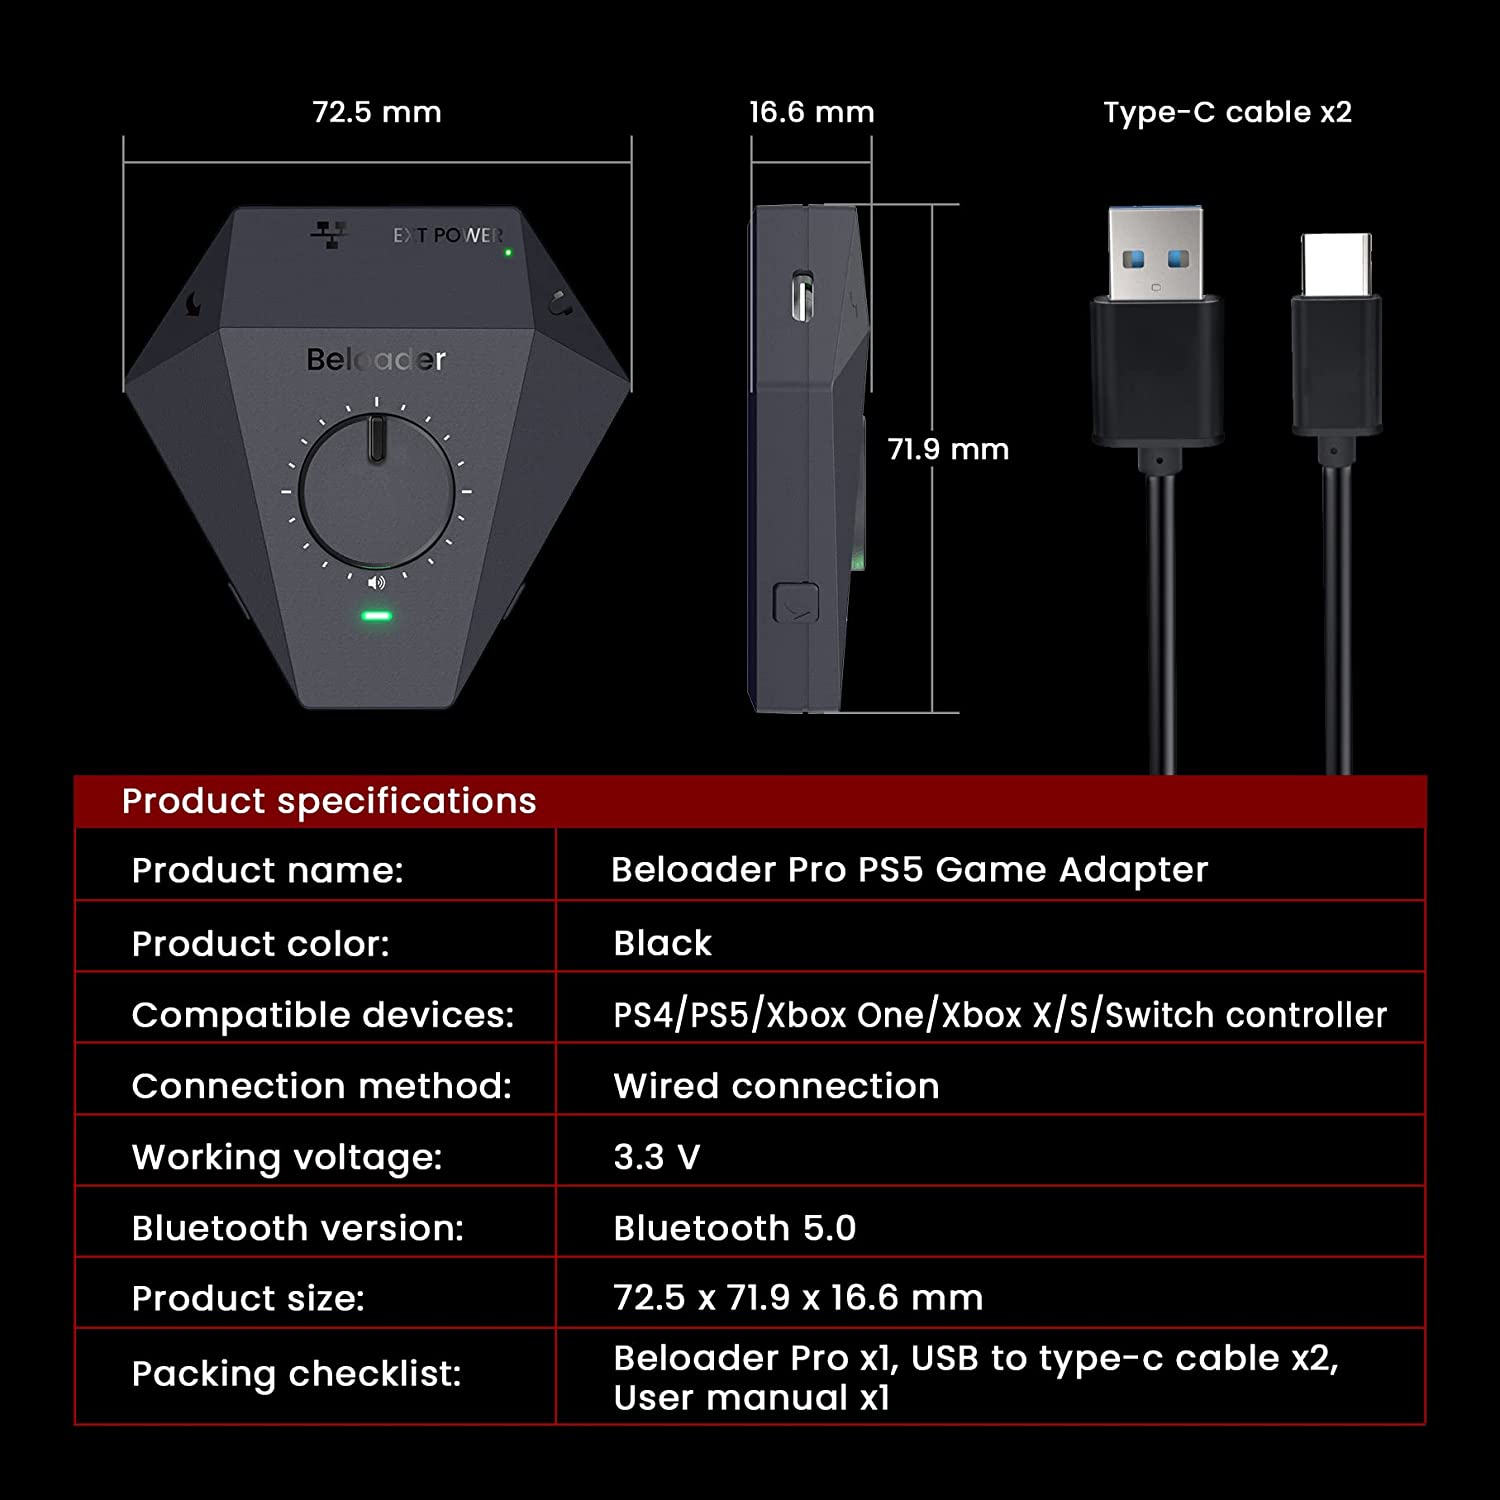 Xim Apex Keyboard and Mouse Adaptor price in UAE,  UAE